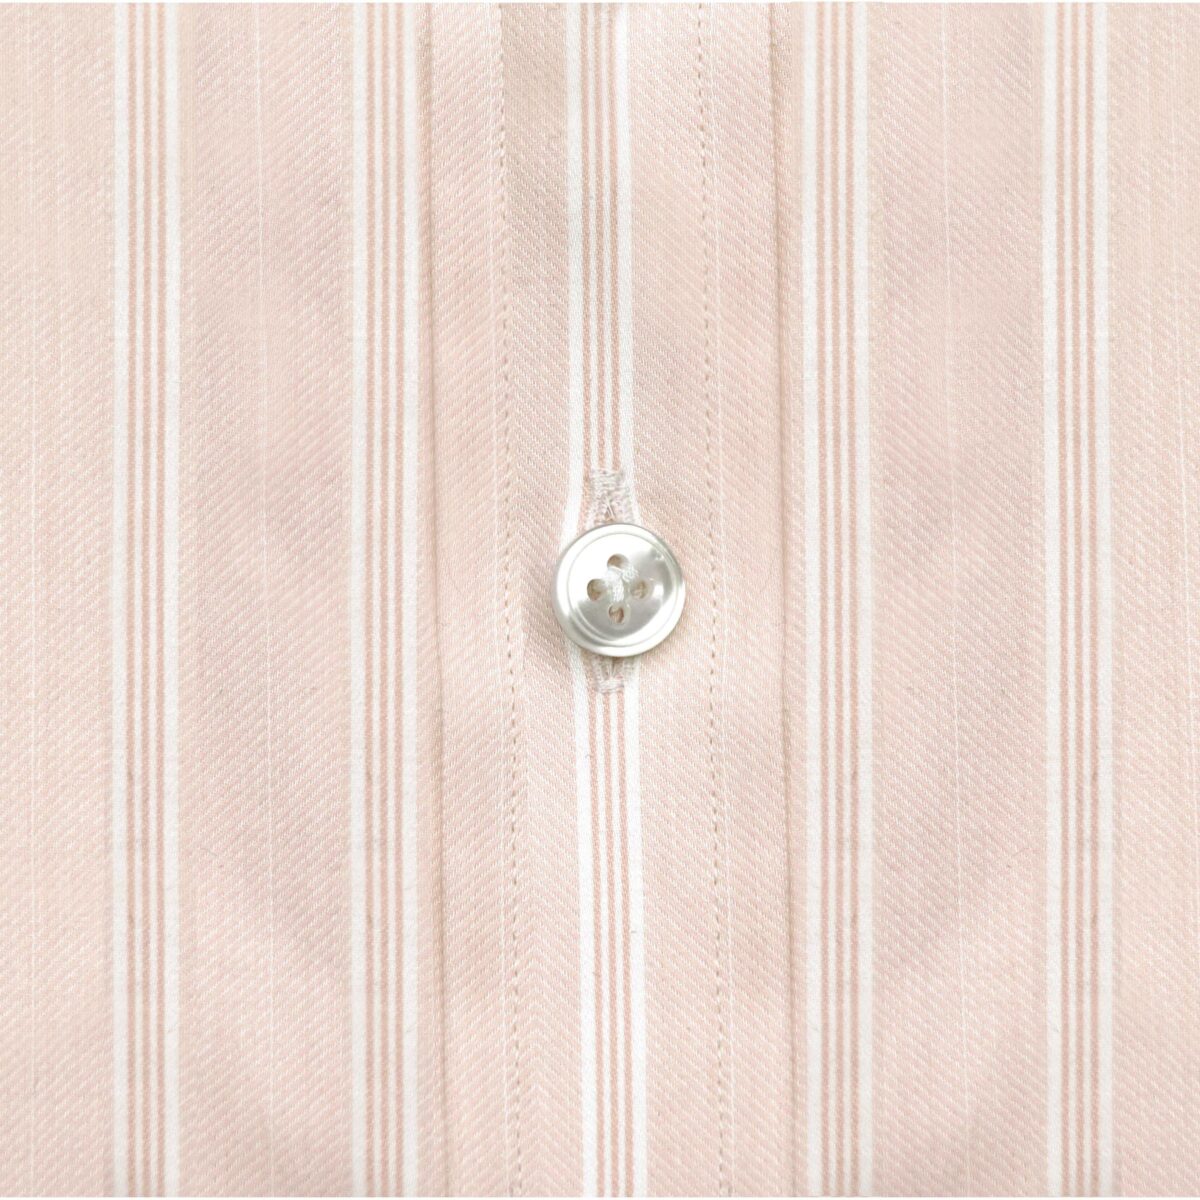 Beige Button down high collar shirt by John Clothier London